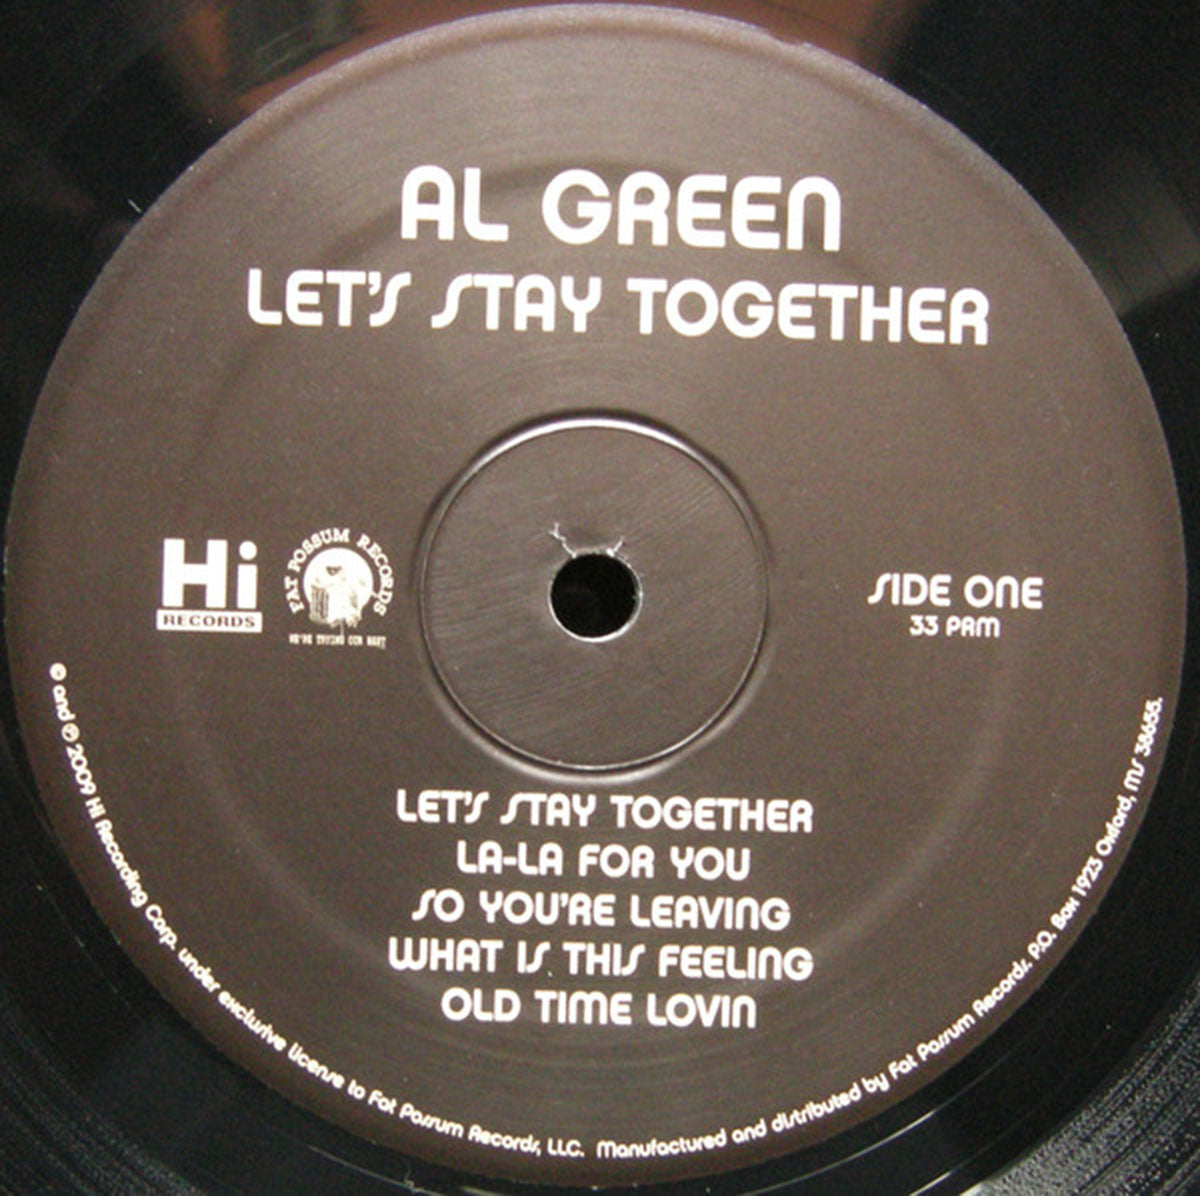 Al Green – Let's Stay Together - US Pressing